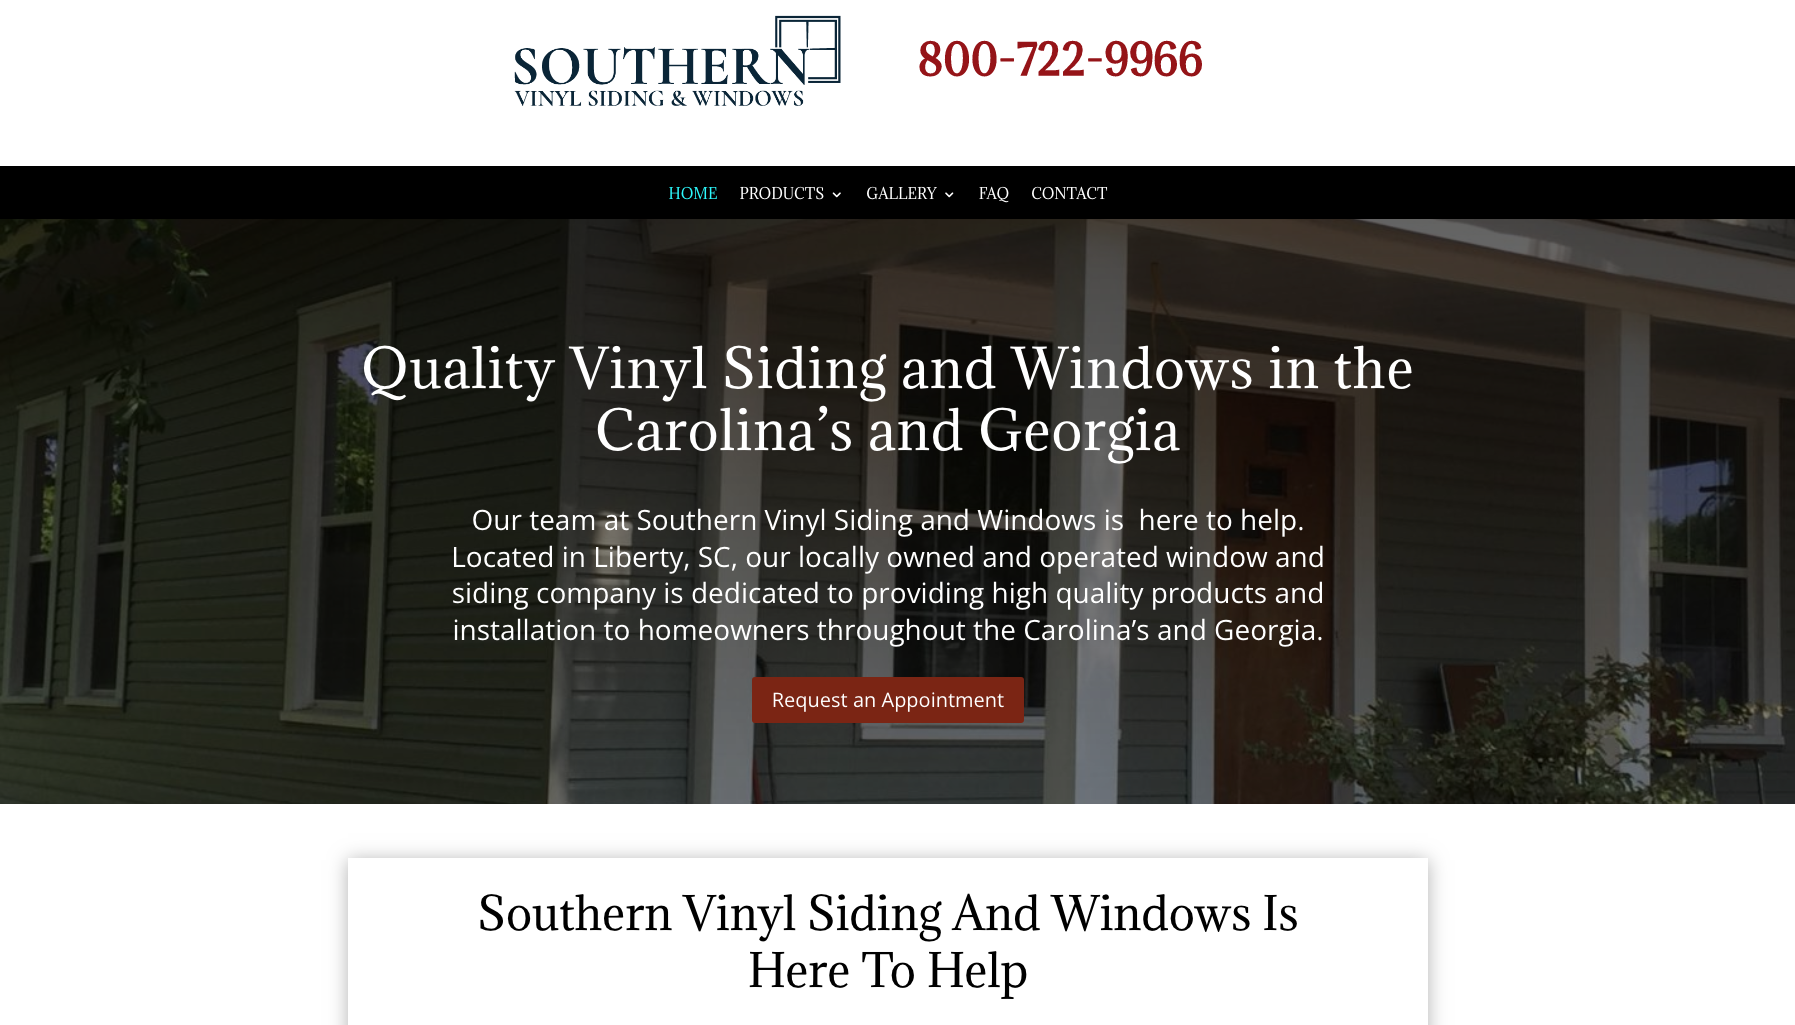 Southern Vinyl Siding & Windows website home page